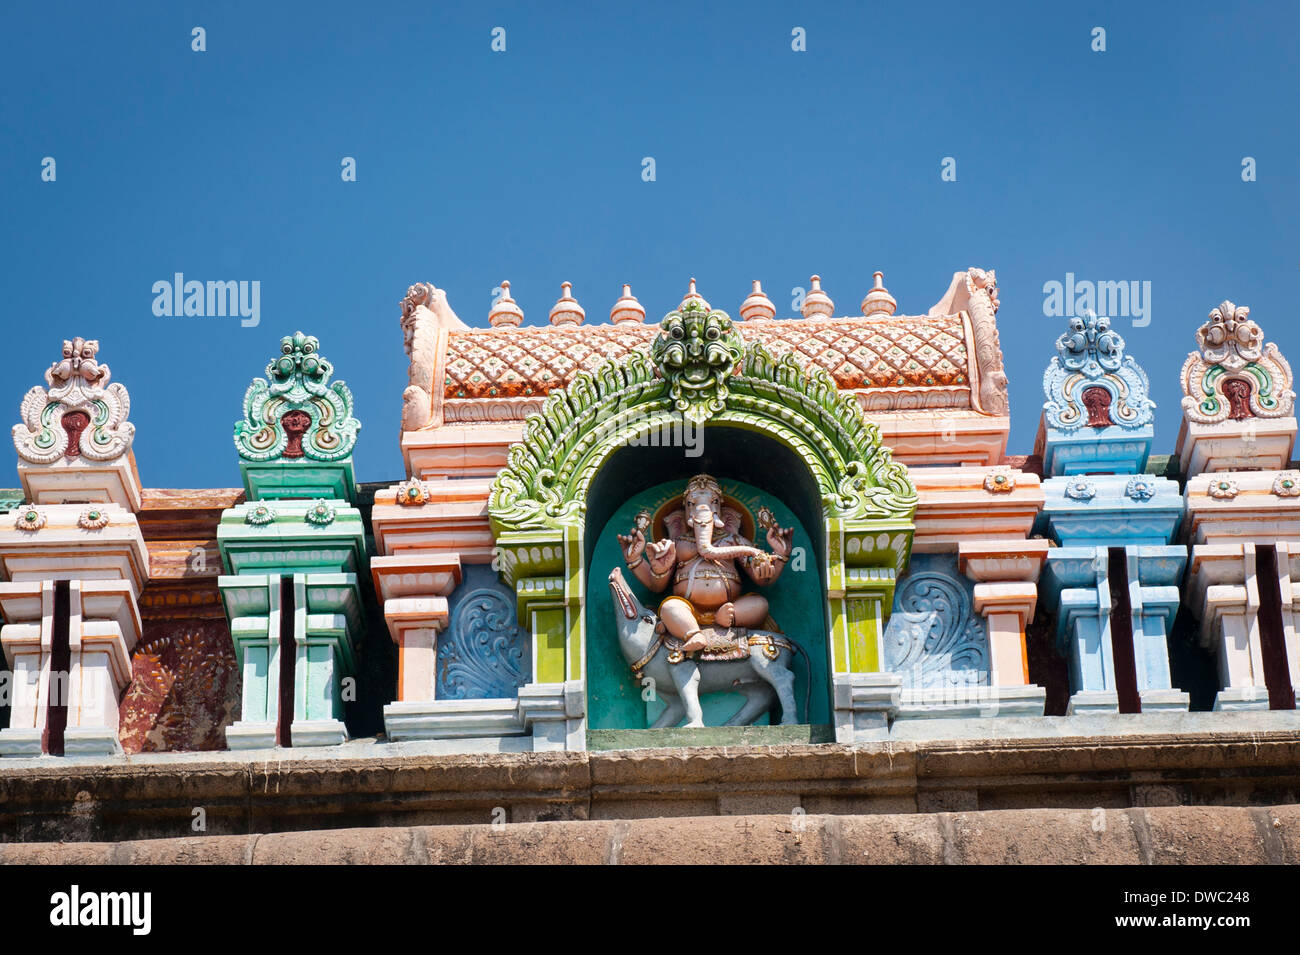 Indien Tamil Nadu Kanchipuram Sri Ekambaranathar Ekambareswarar Tempel Tempel Shiva Hindu 6. Jahrhundert Dach detail Figuren Elefant Ganesh blauer Himmel Stockfoto